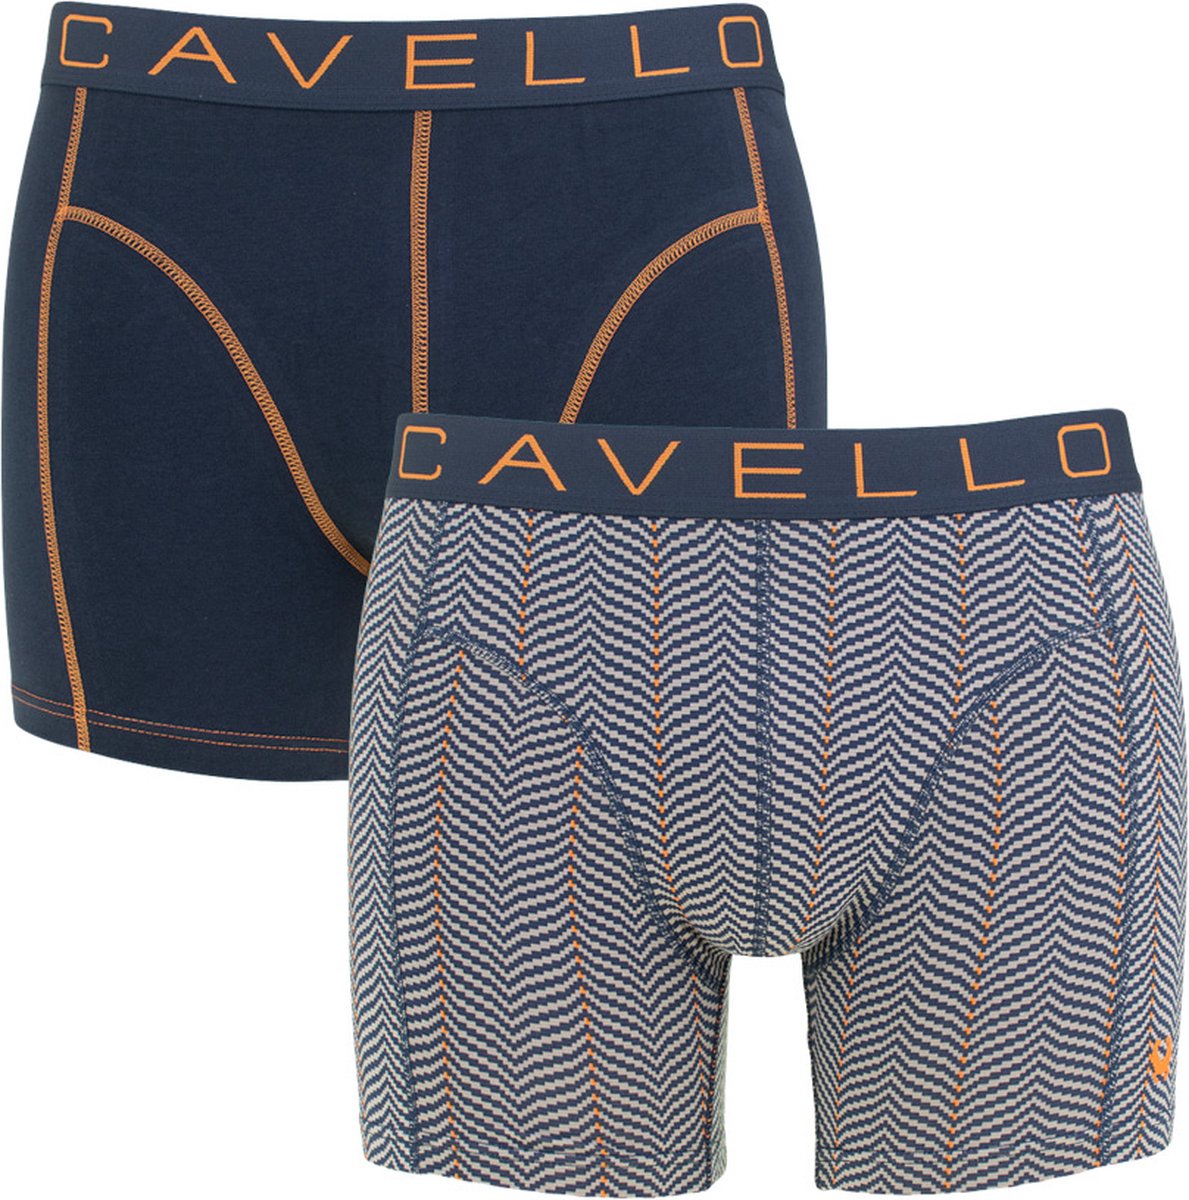 Cavello Boxershorts blauw print